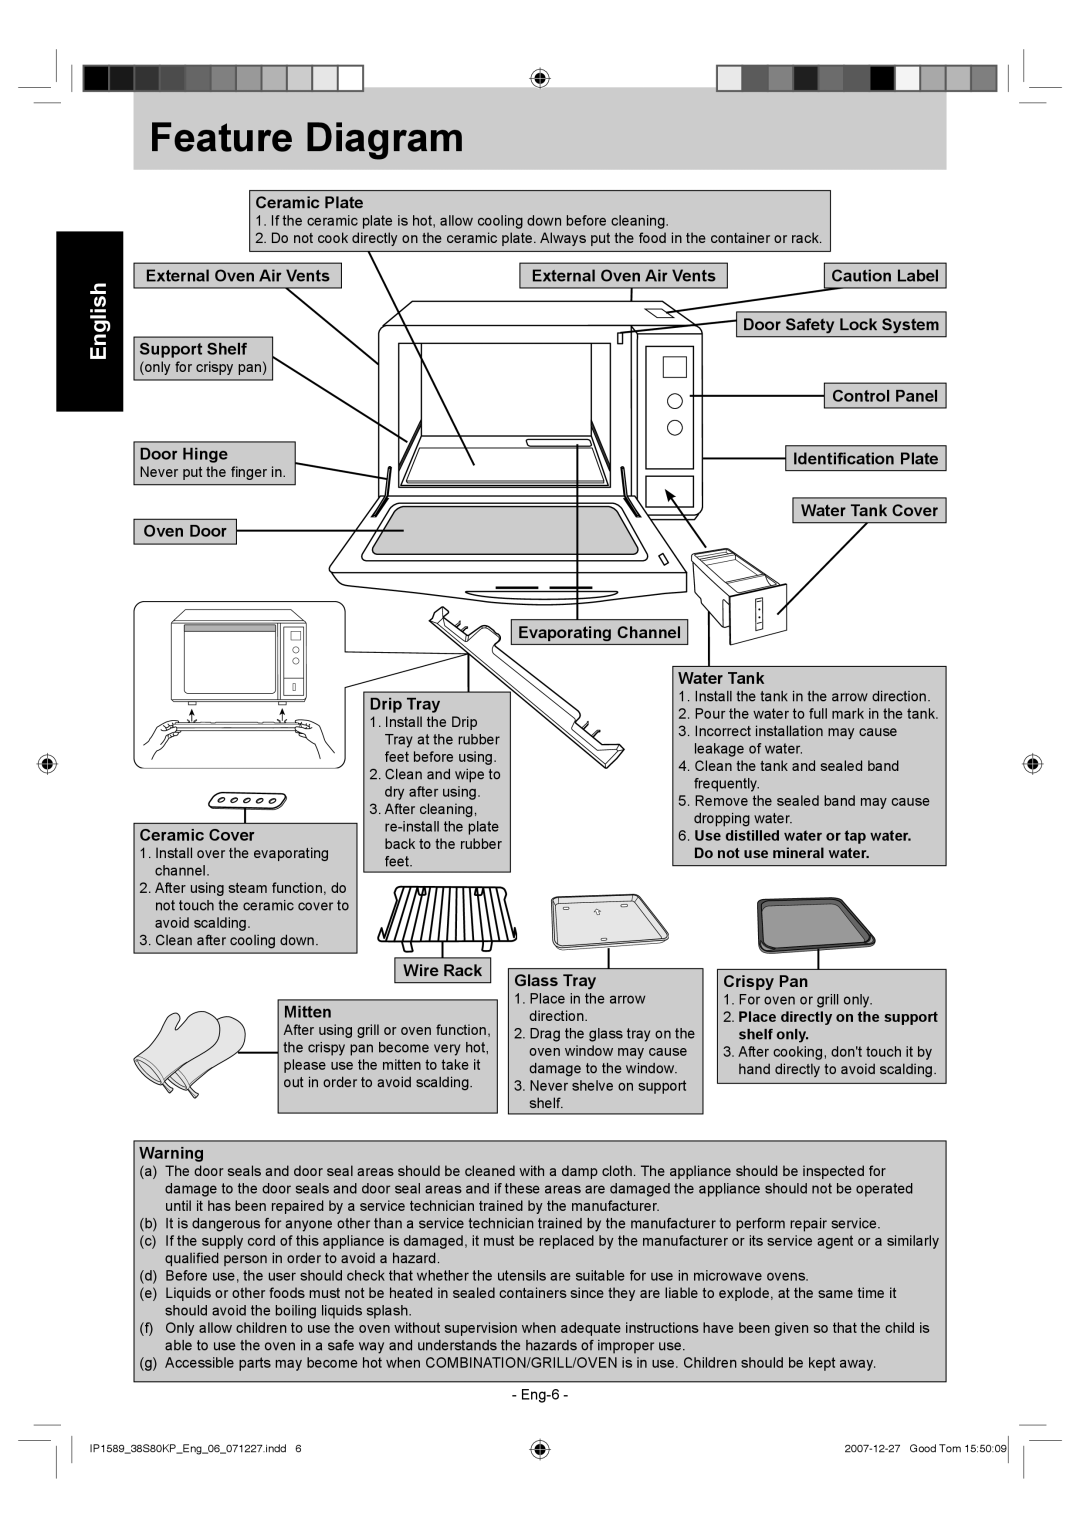 Panasonic NN-GS597M Feature Diagram, Ceramic Plate, External Oven Air Vents Support Shelf, Control Panel, Door Hinge 